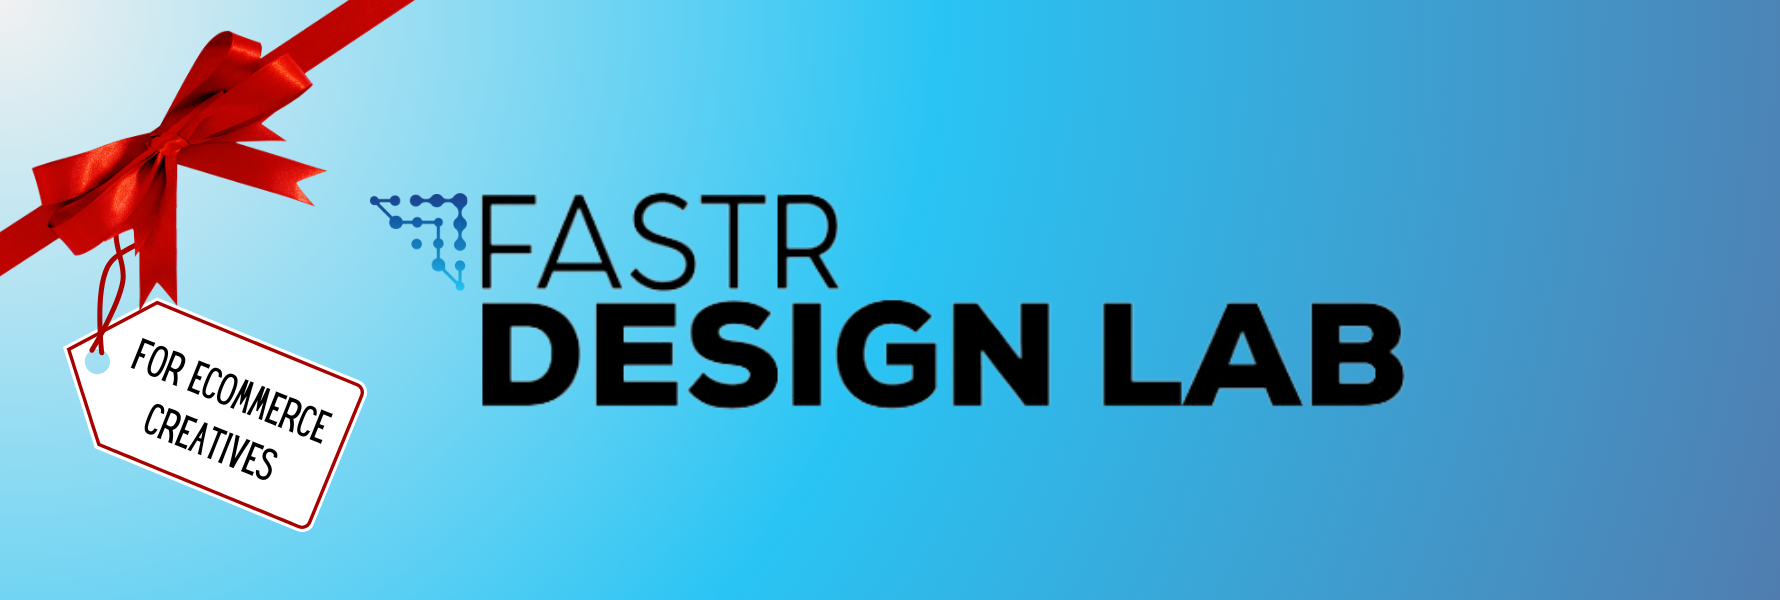 Webinar Recap: FASTR Design Lab